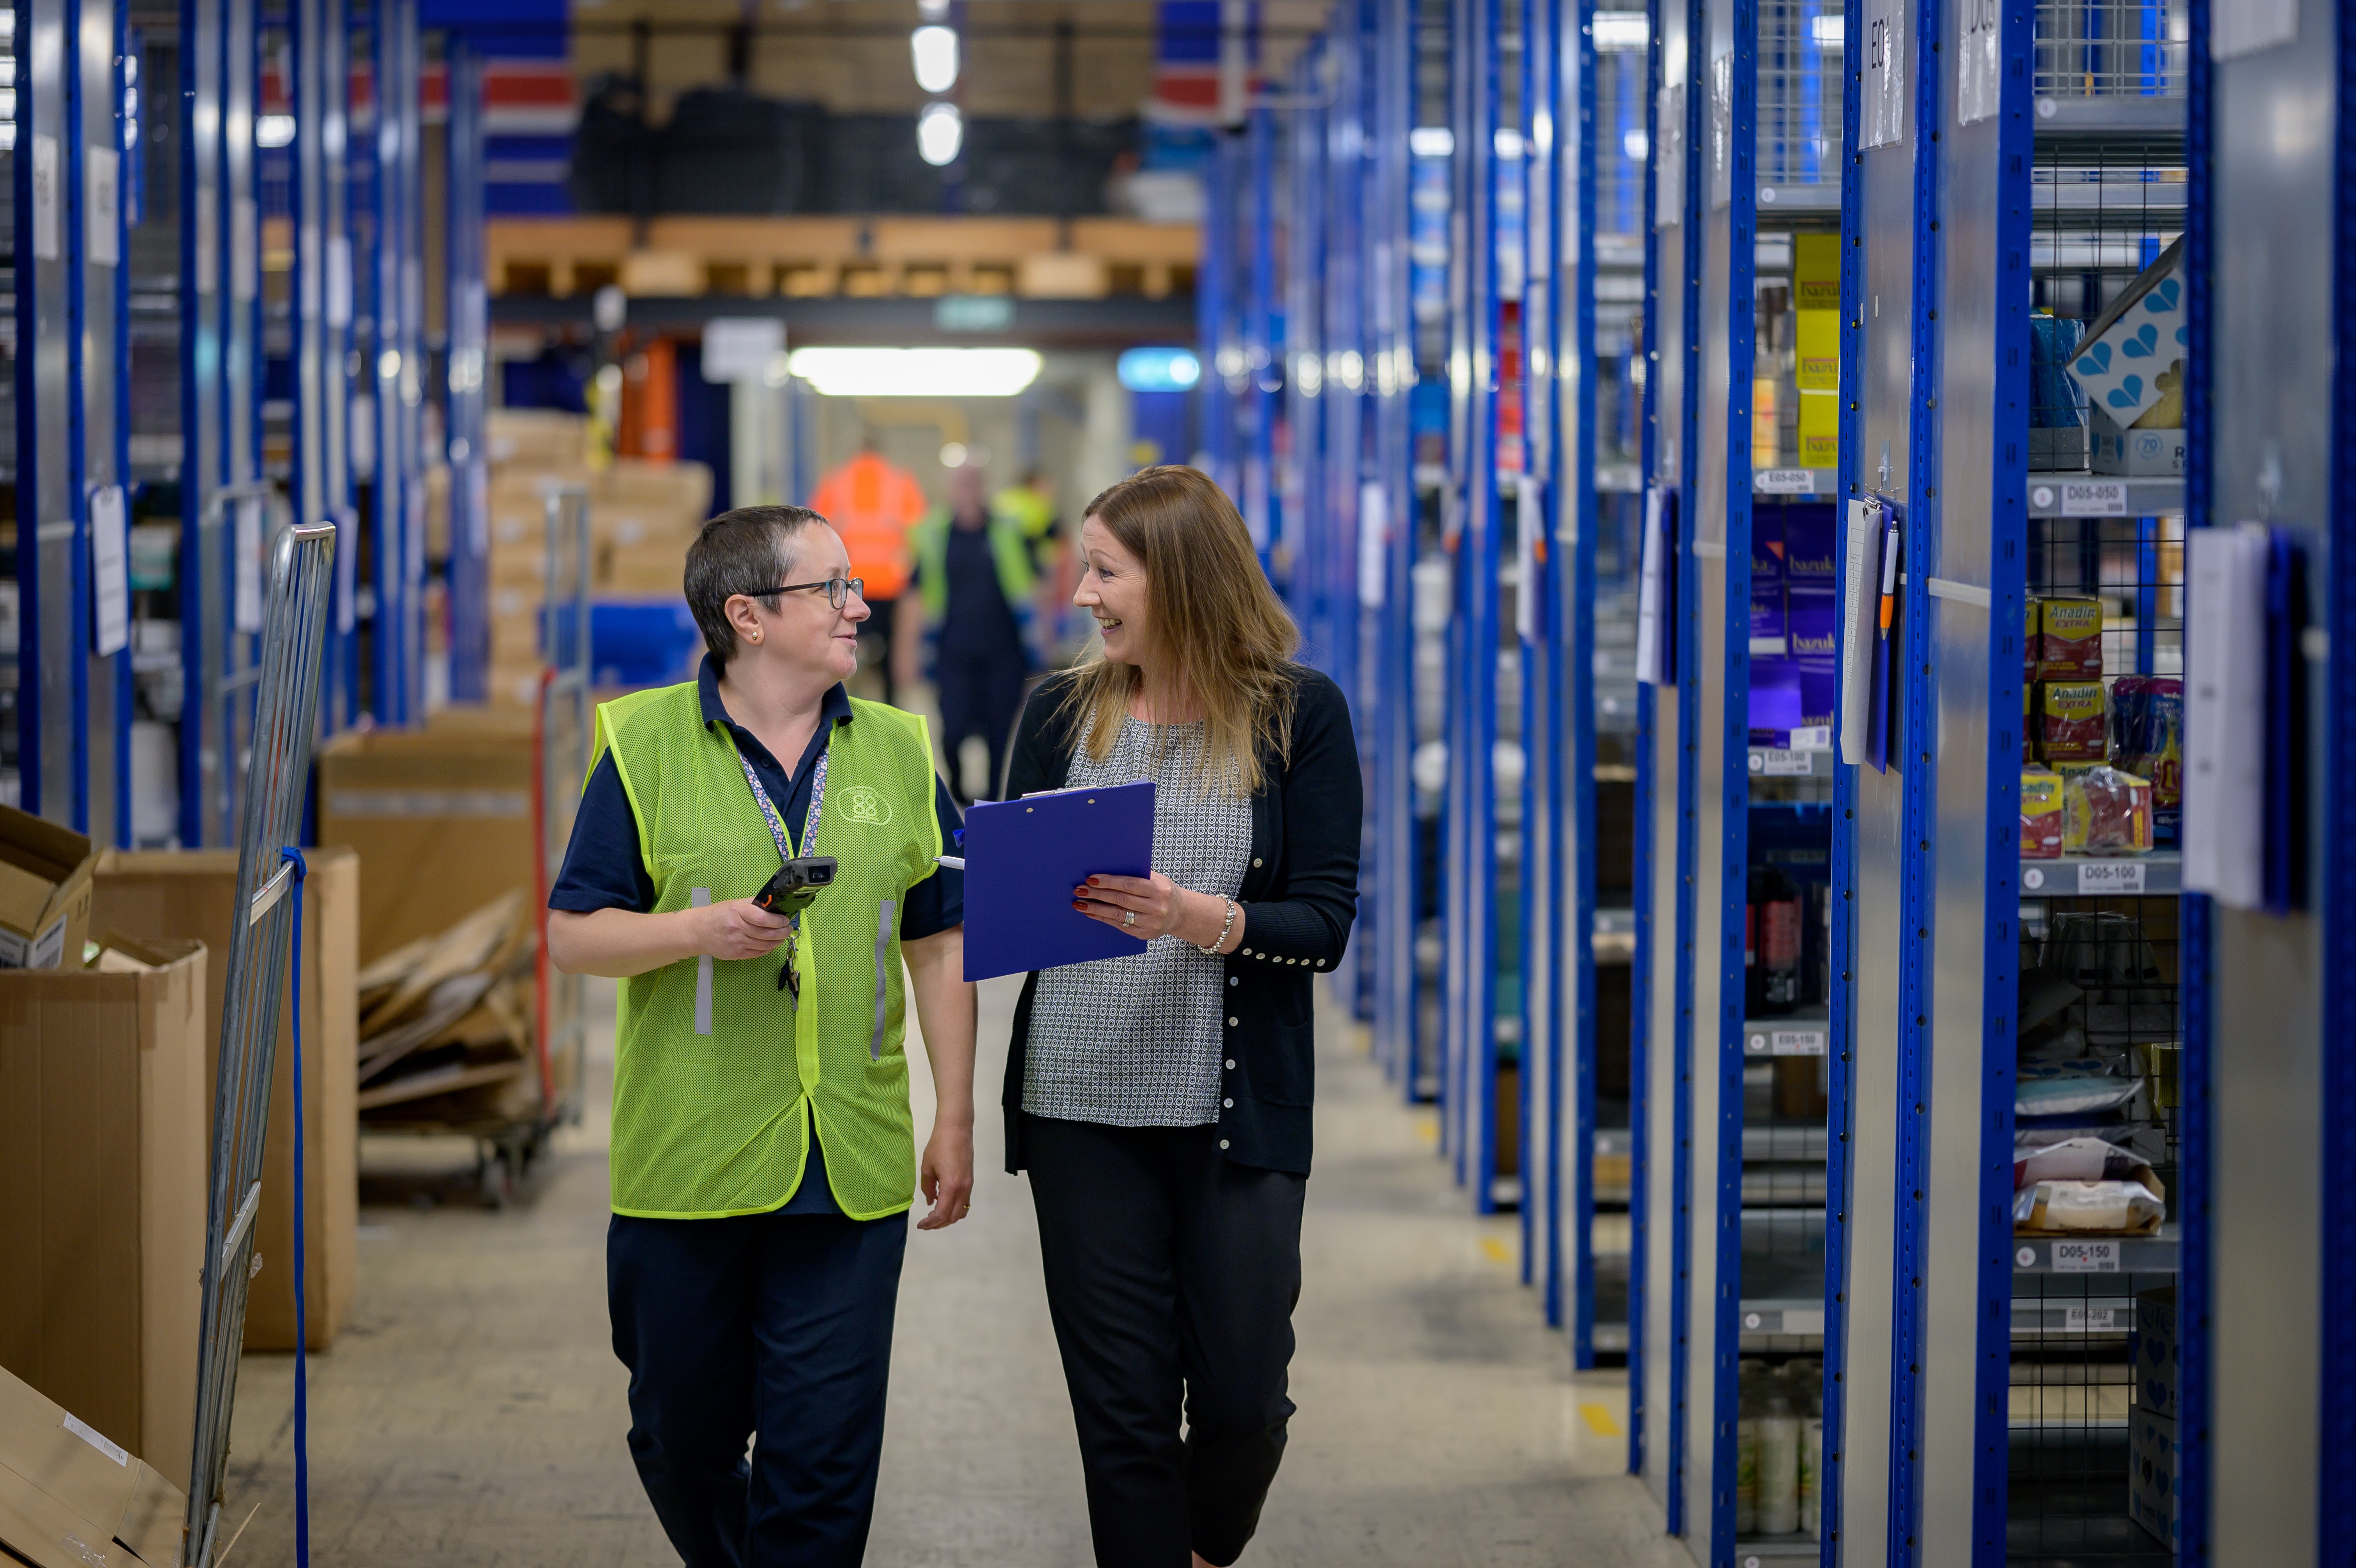 SkuNexus helps merchants take and keep warehouse inventory control.